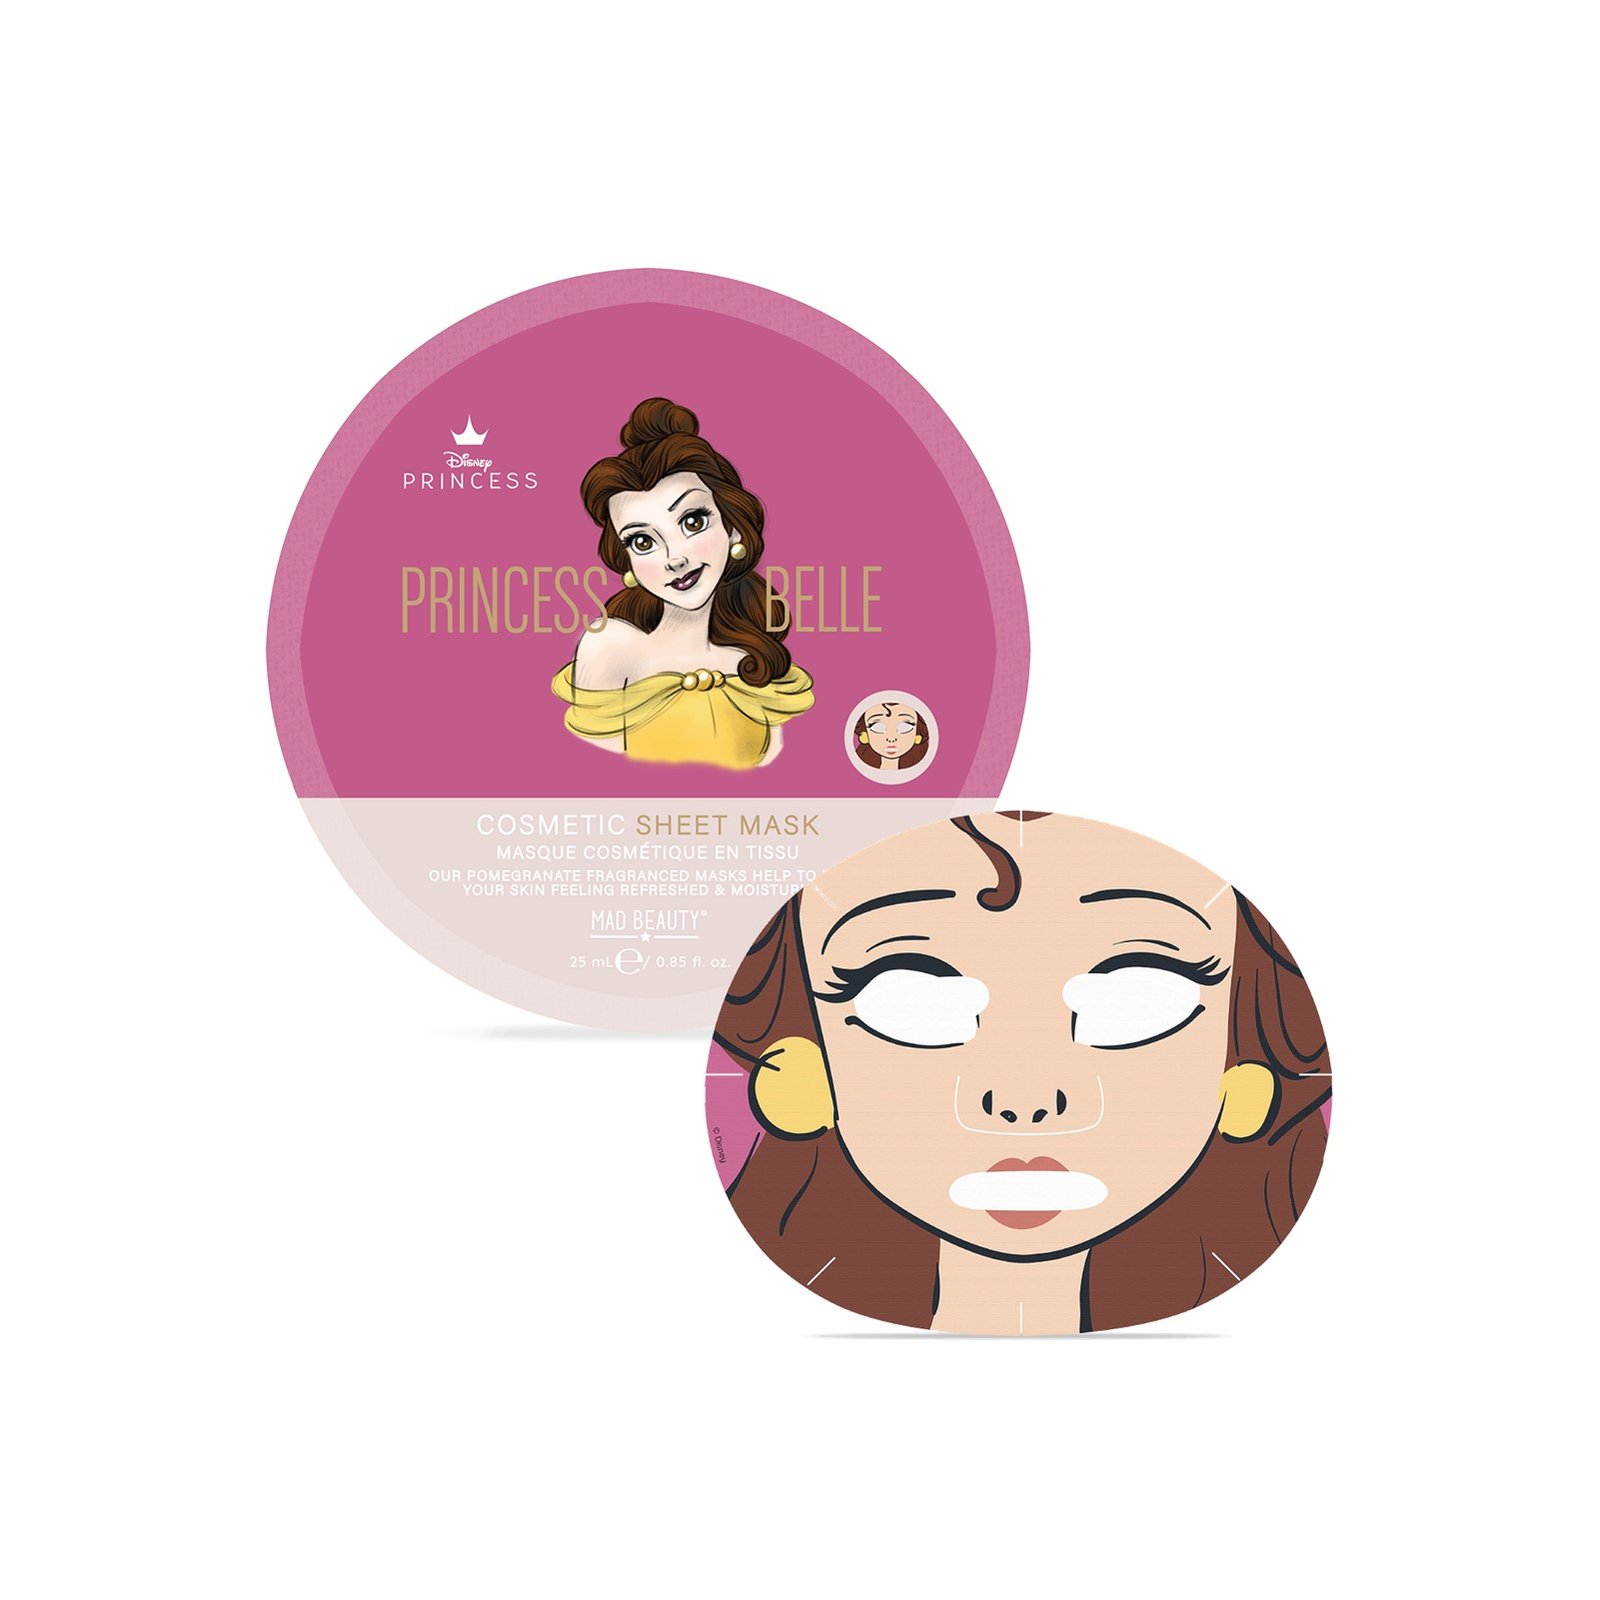 Mad Beauty Disney Princess Belle Cosmetic Sheet Mask 25ml (0.85 fl oz)